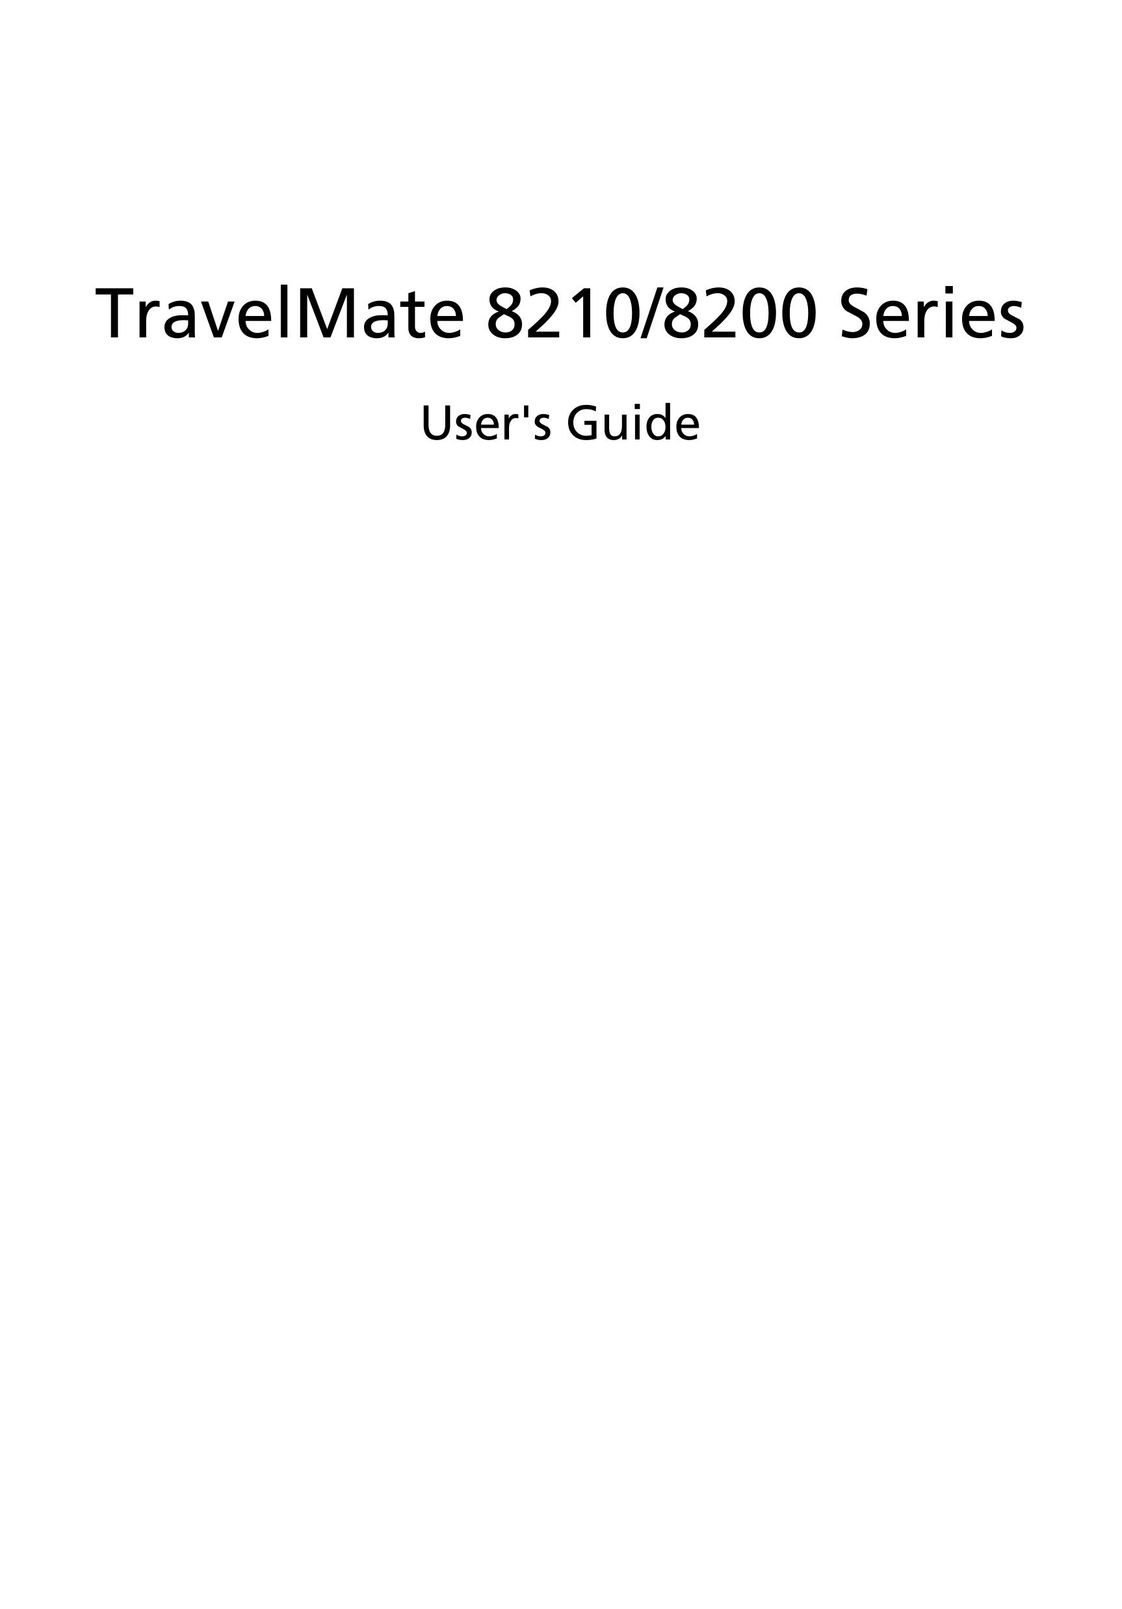 Space Bag 8210 Laptop User Manual